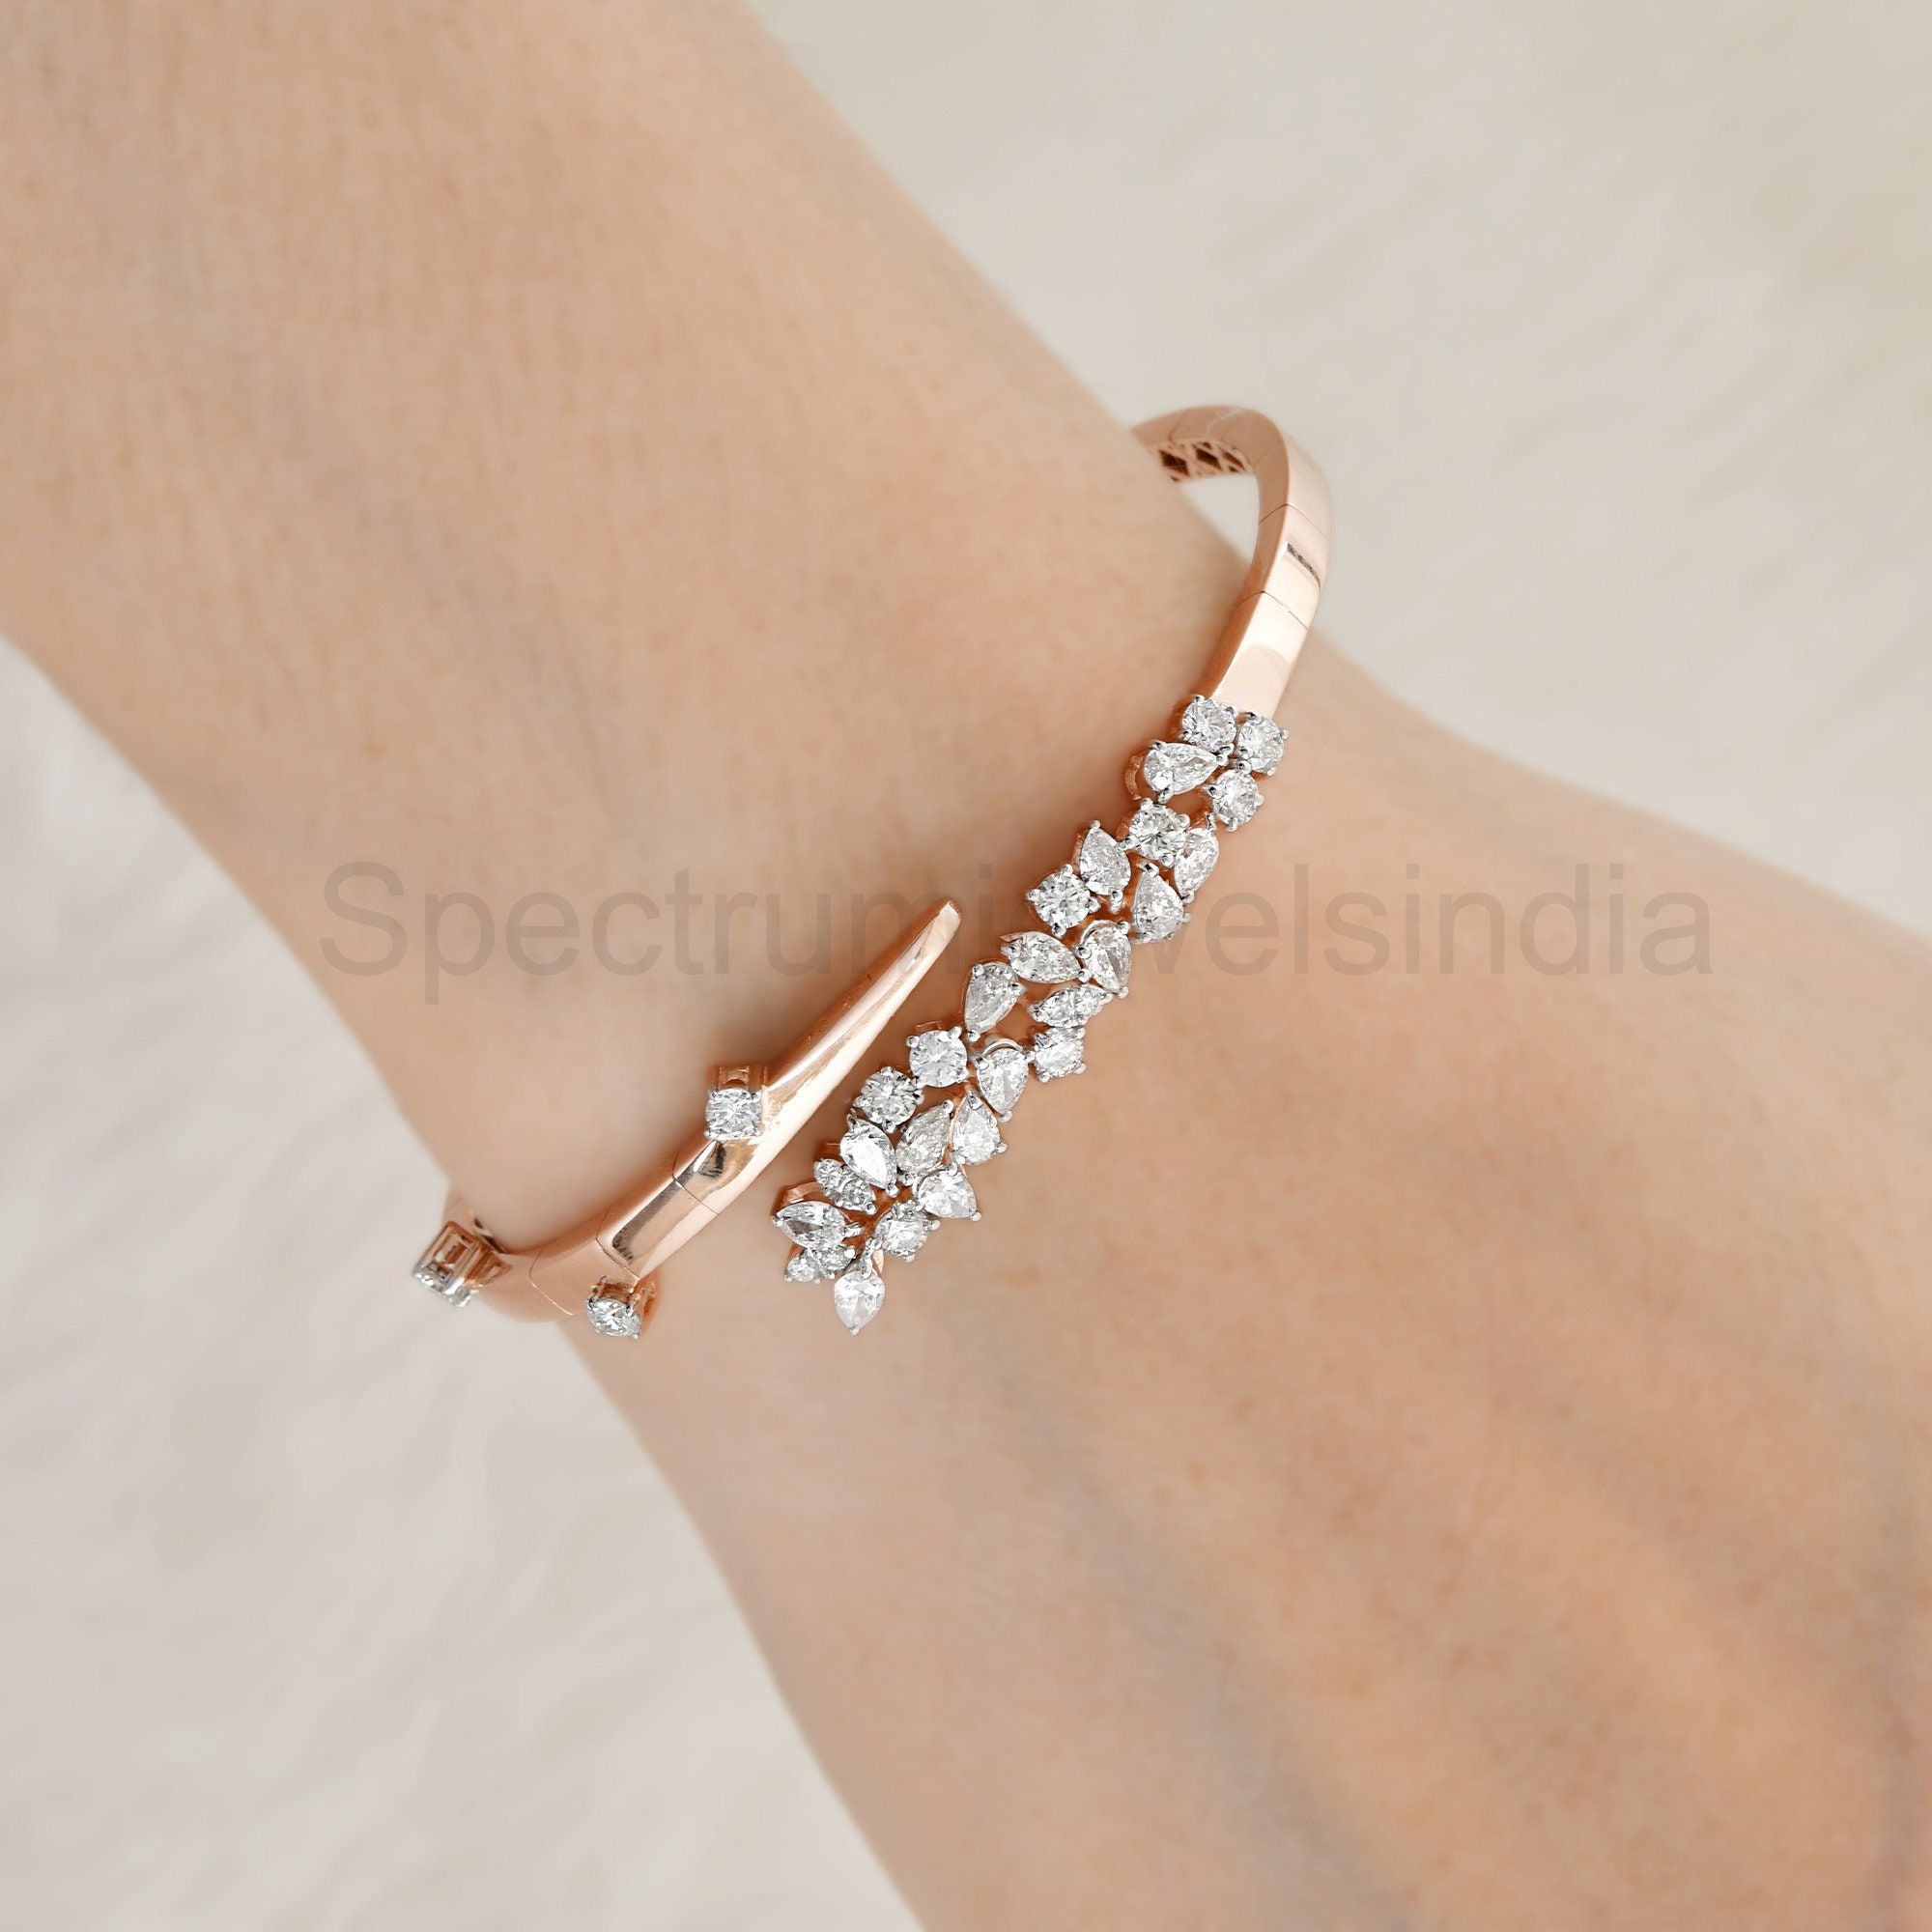 Buy stylish and trendiest diamond bracelet